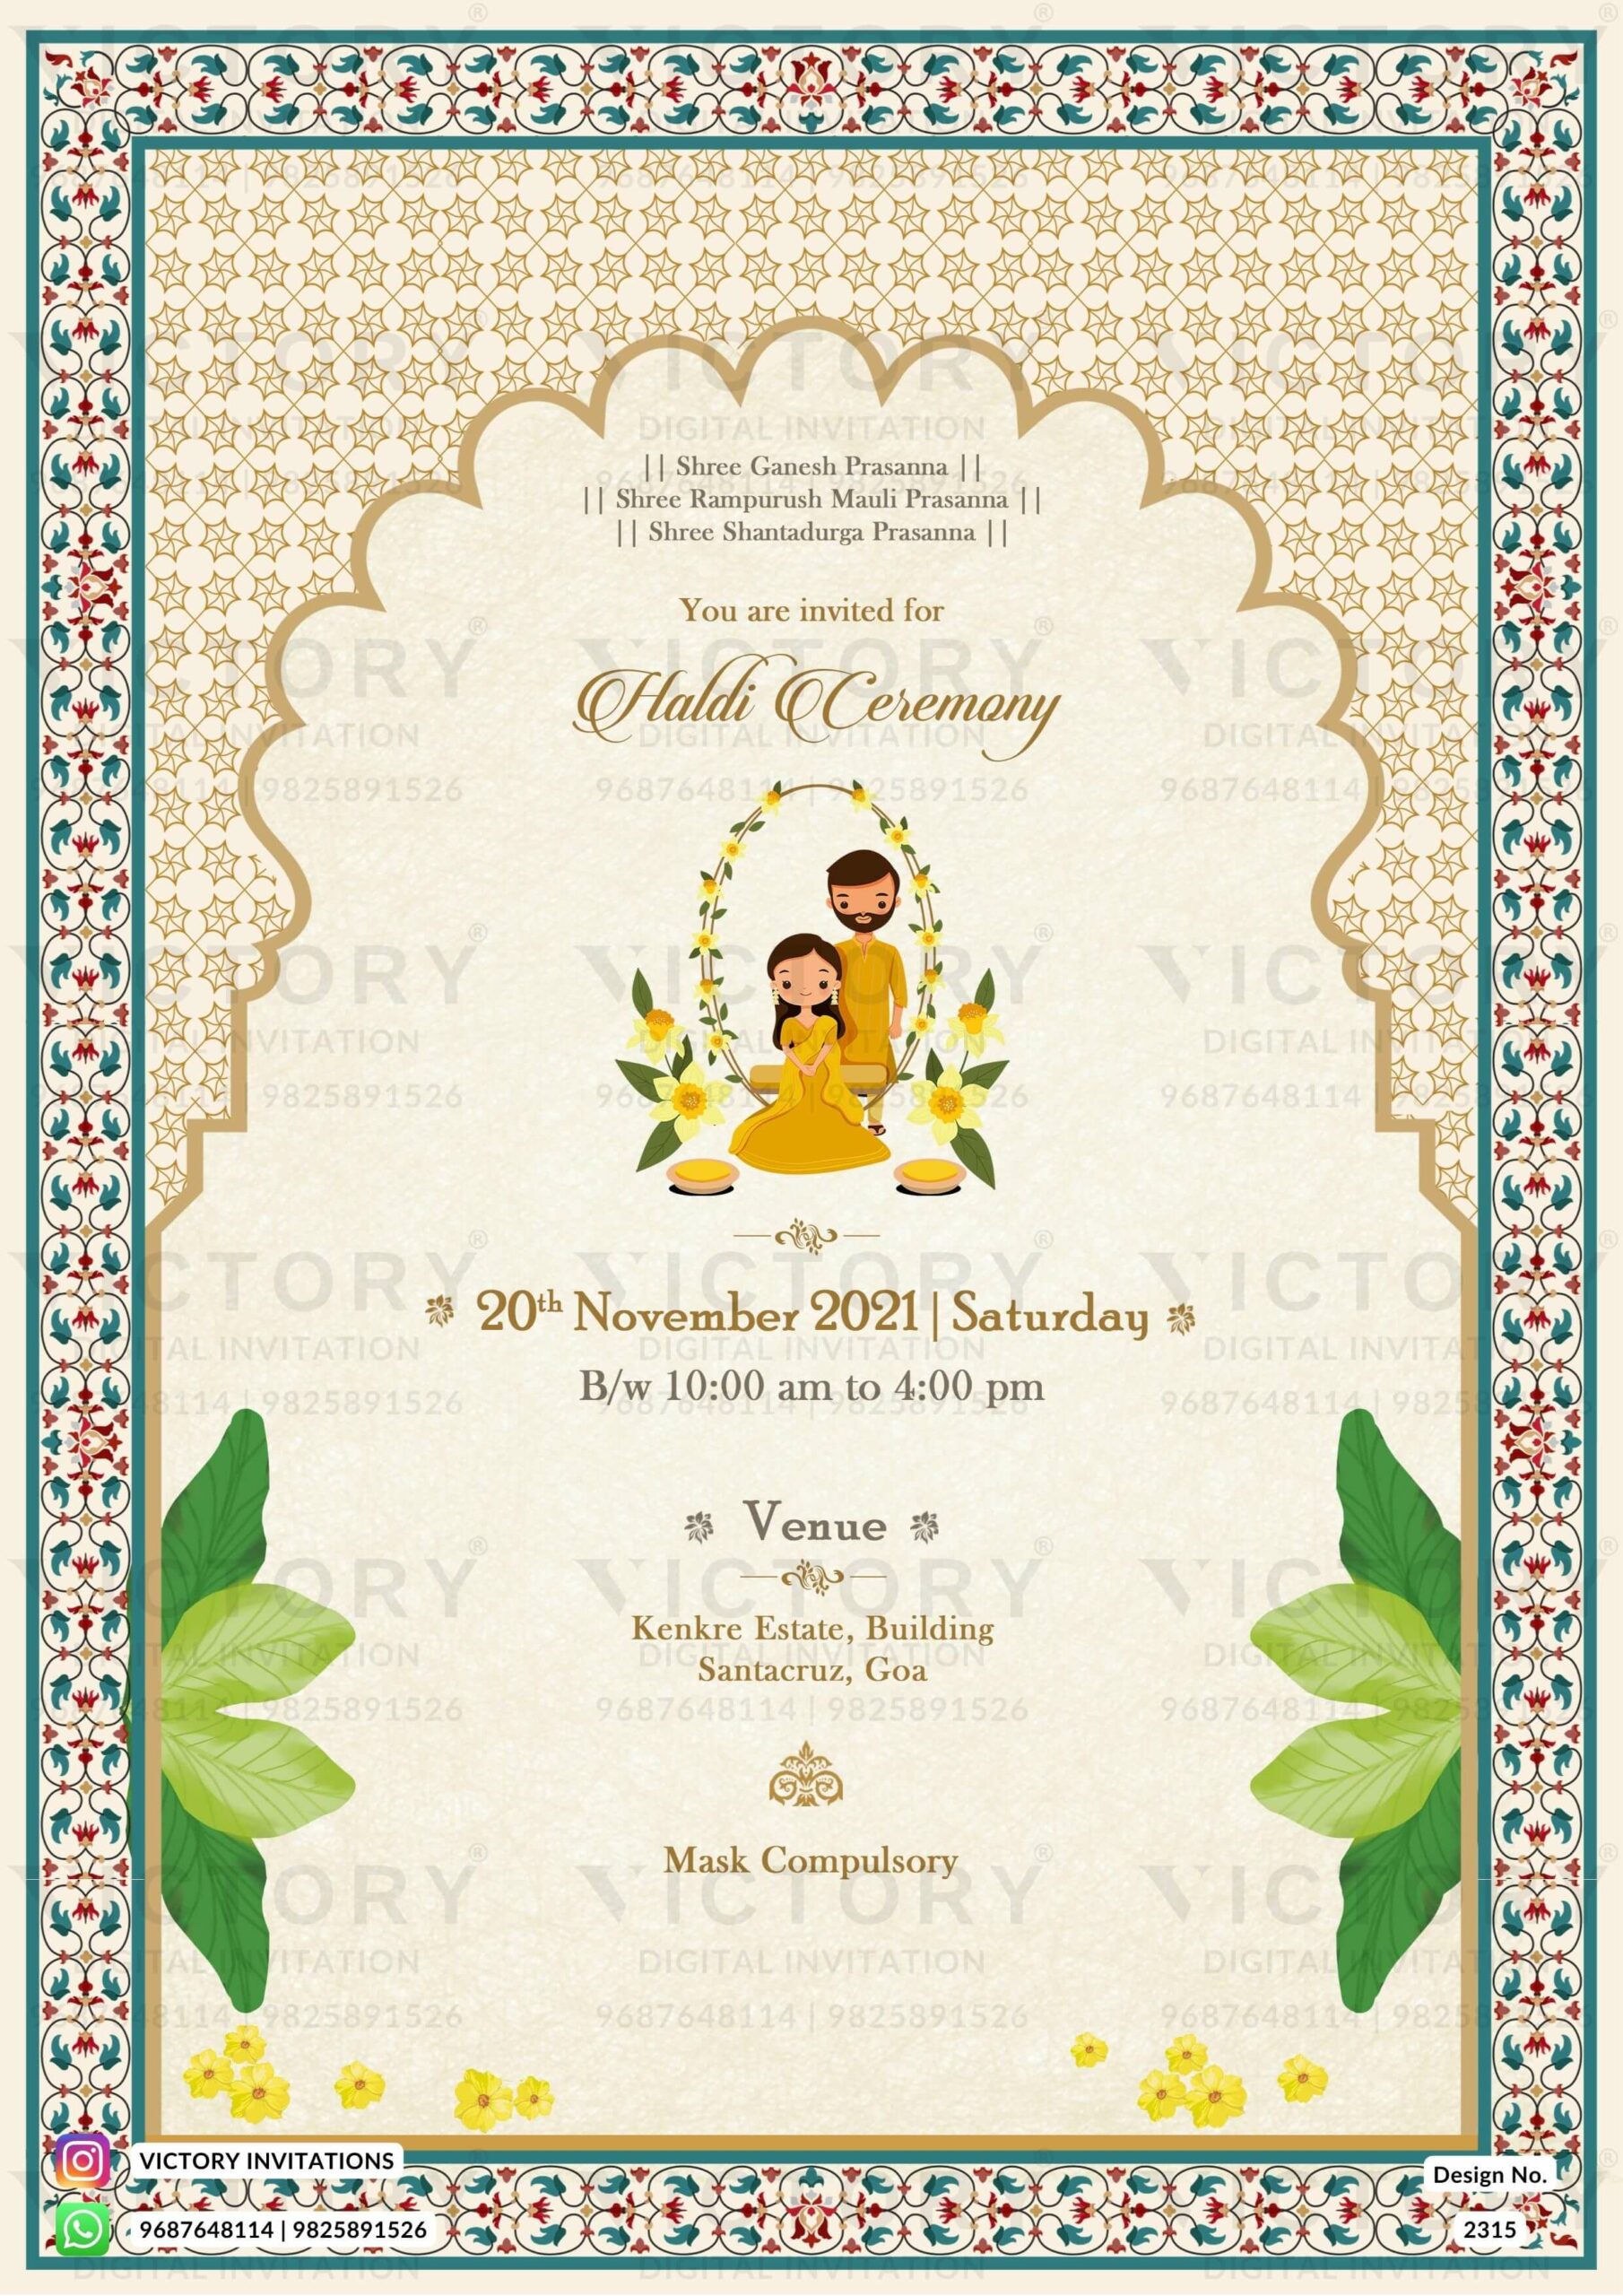 haldi ceremony digital invitation card design number 2315